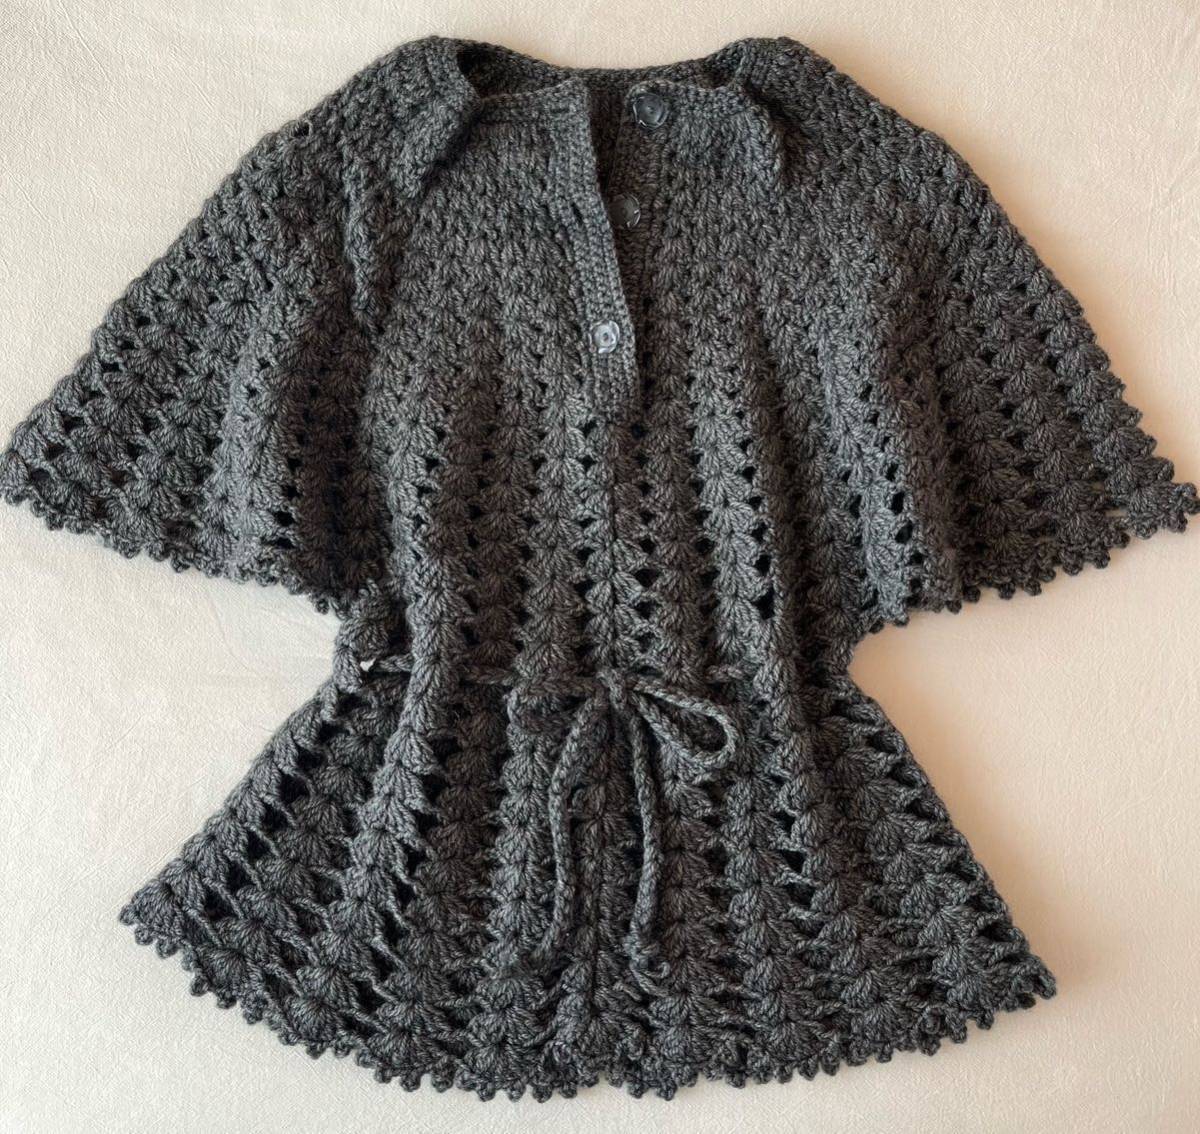 Vintage 70s Hand knit top ヴィンテージ 手編みニット バタフライスリーブ USA 美品